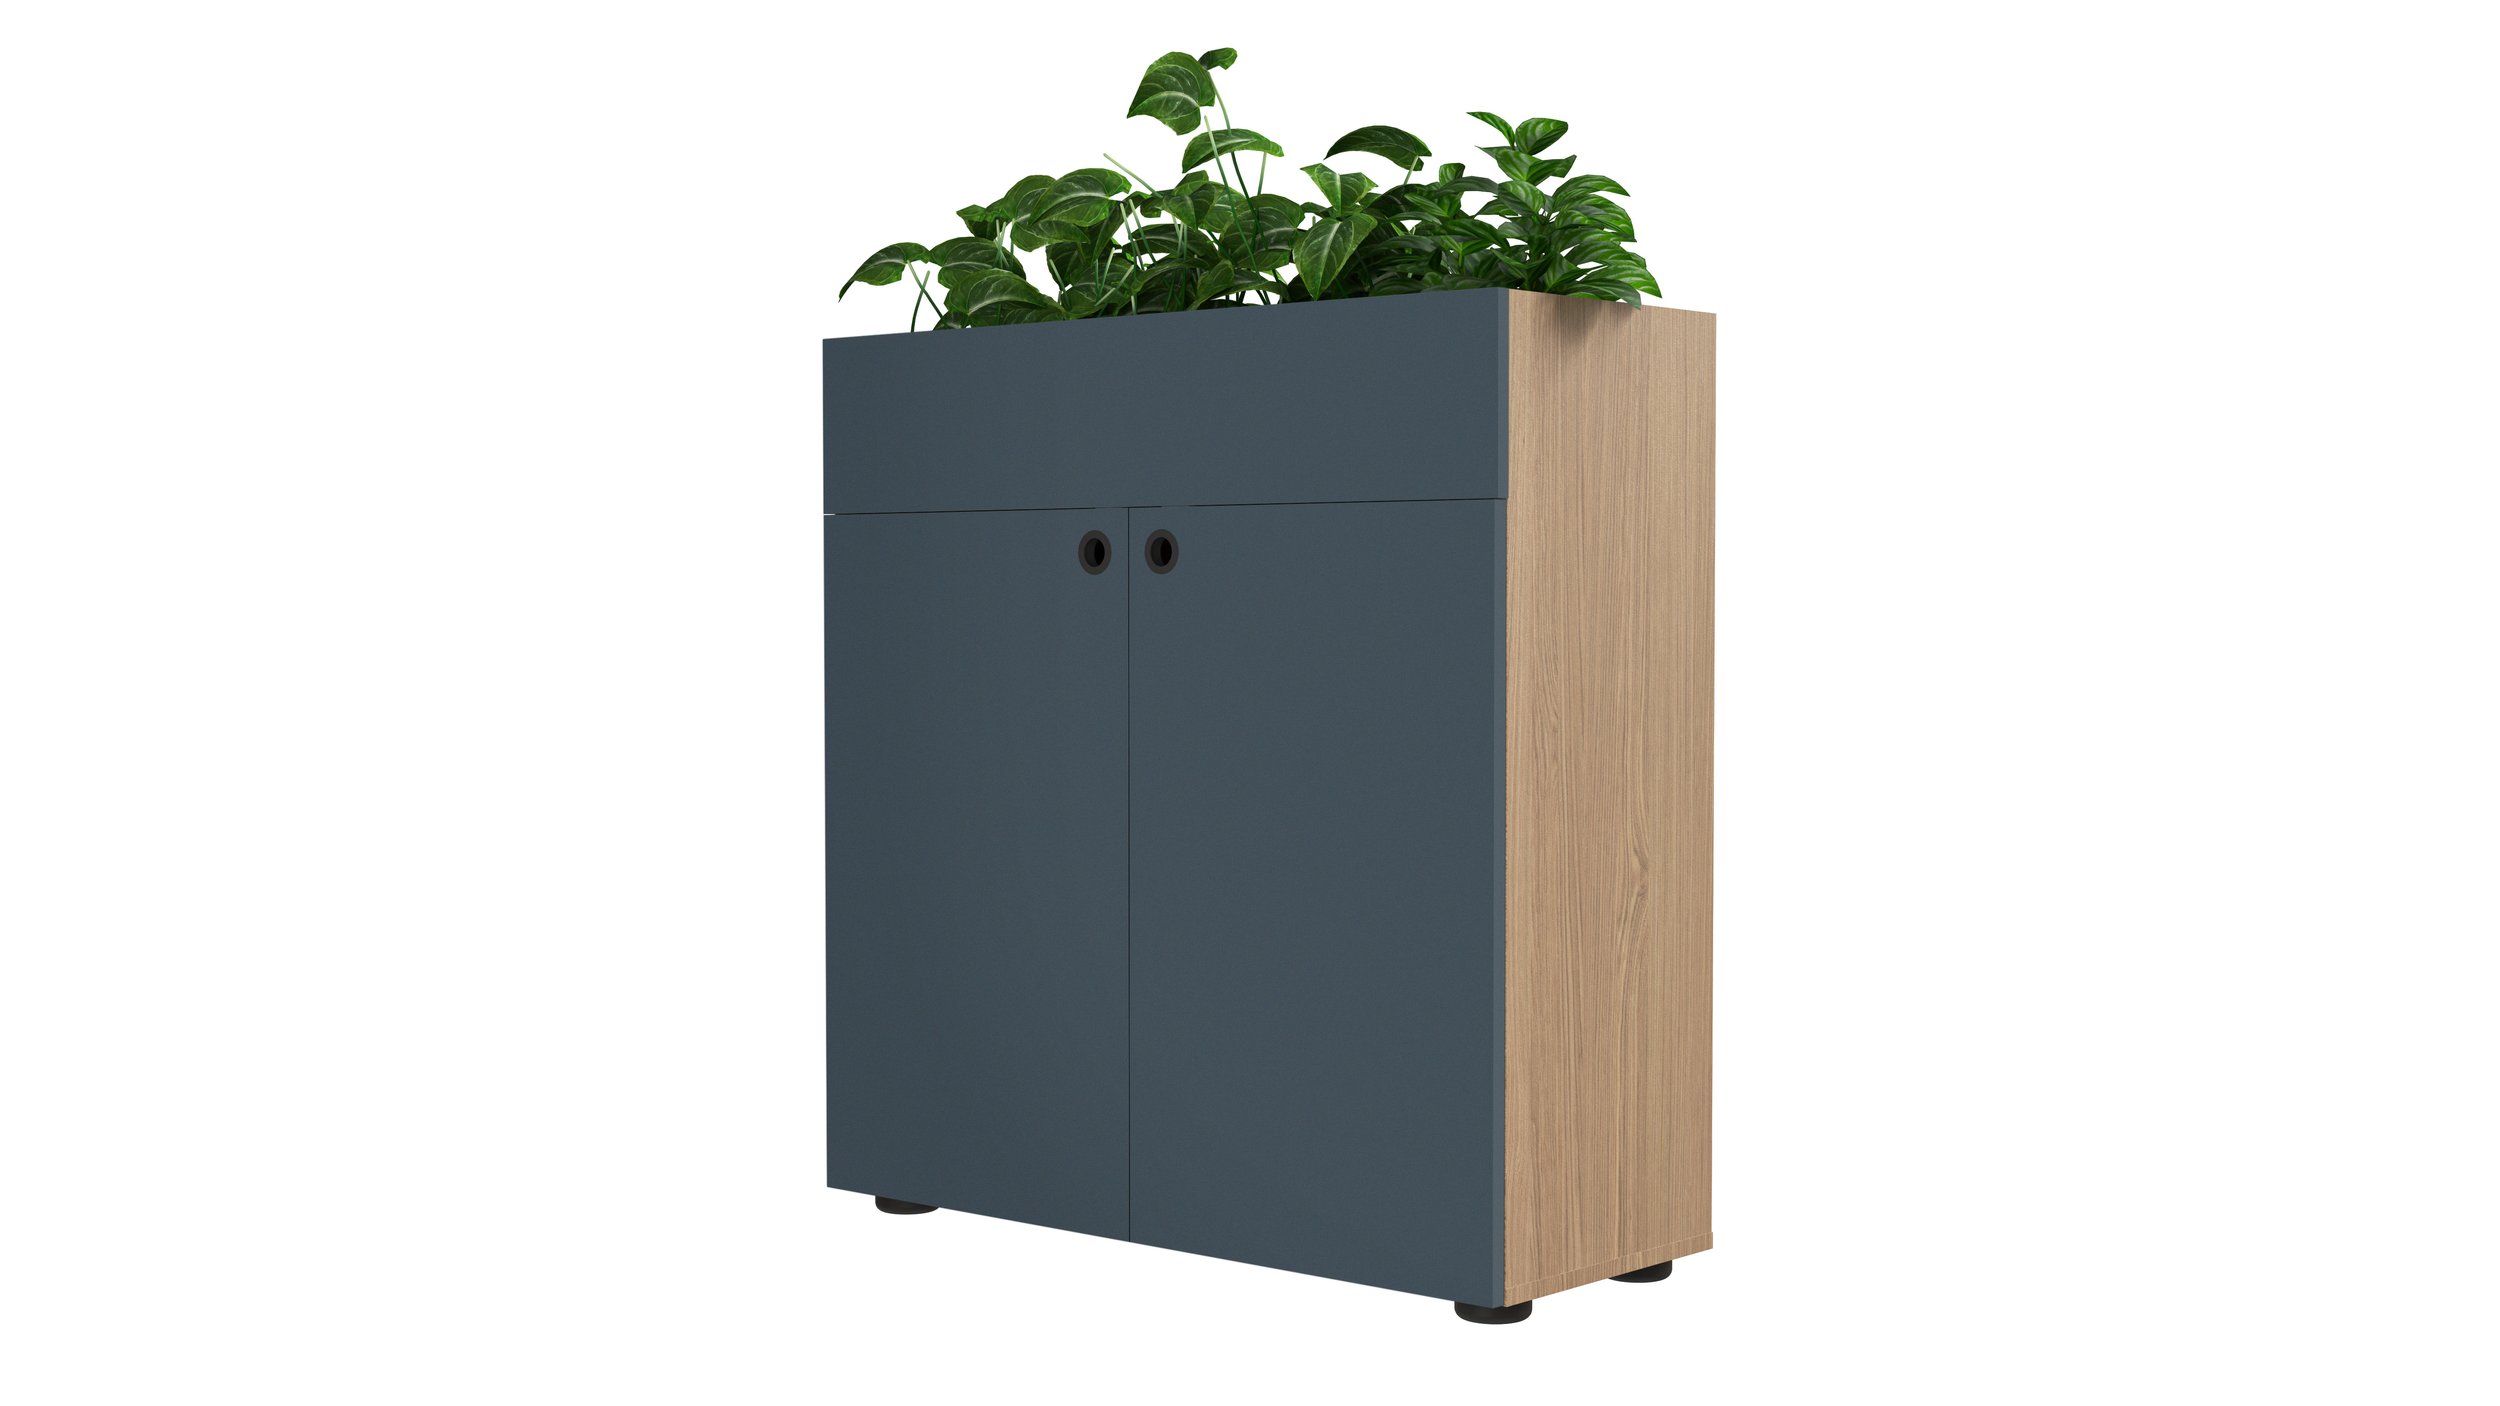 Rawside Work Storage with Planter - Smokey Blue